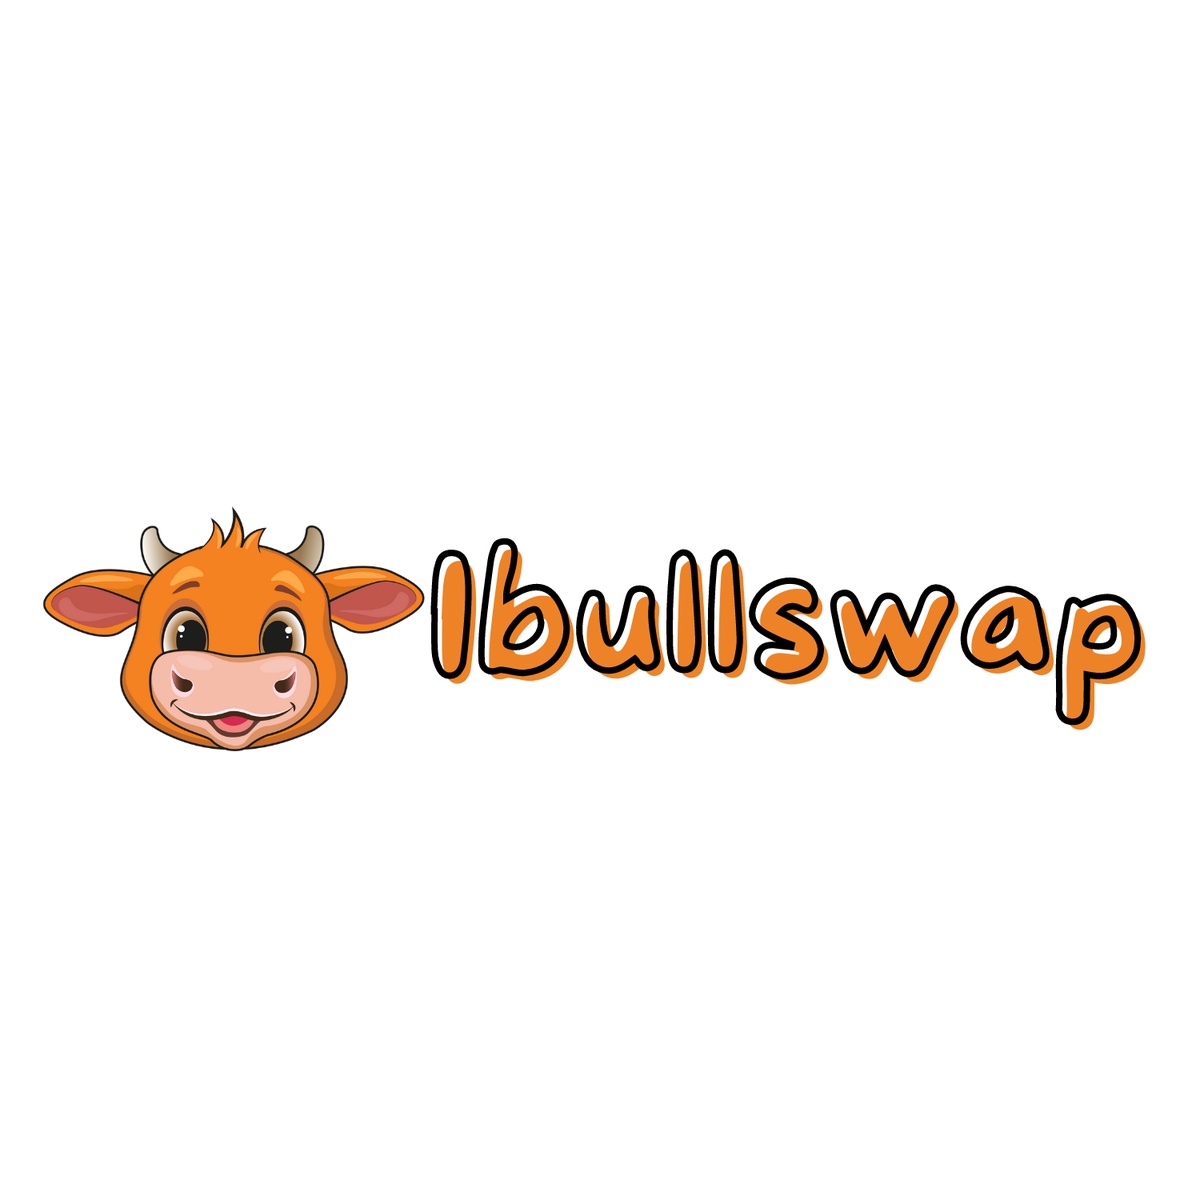 BullSwap Token Review